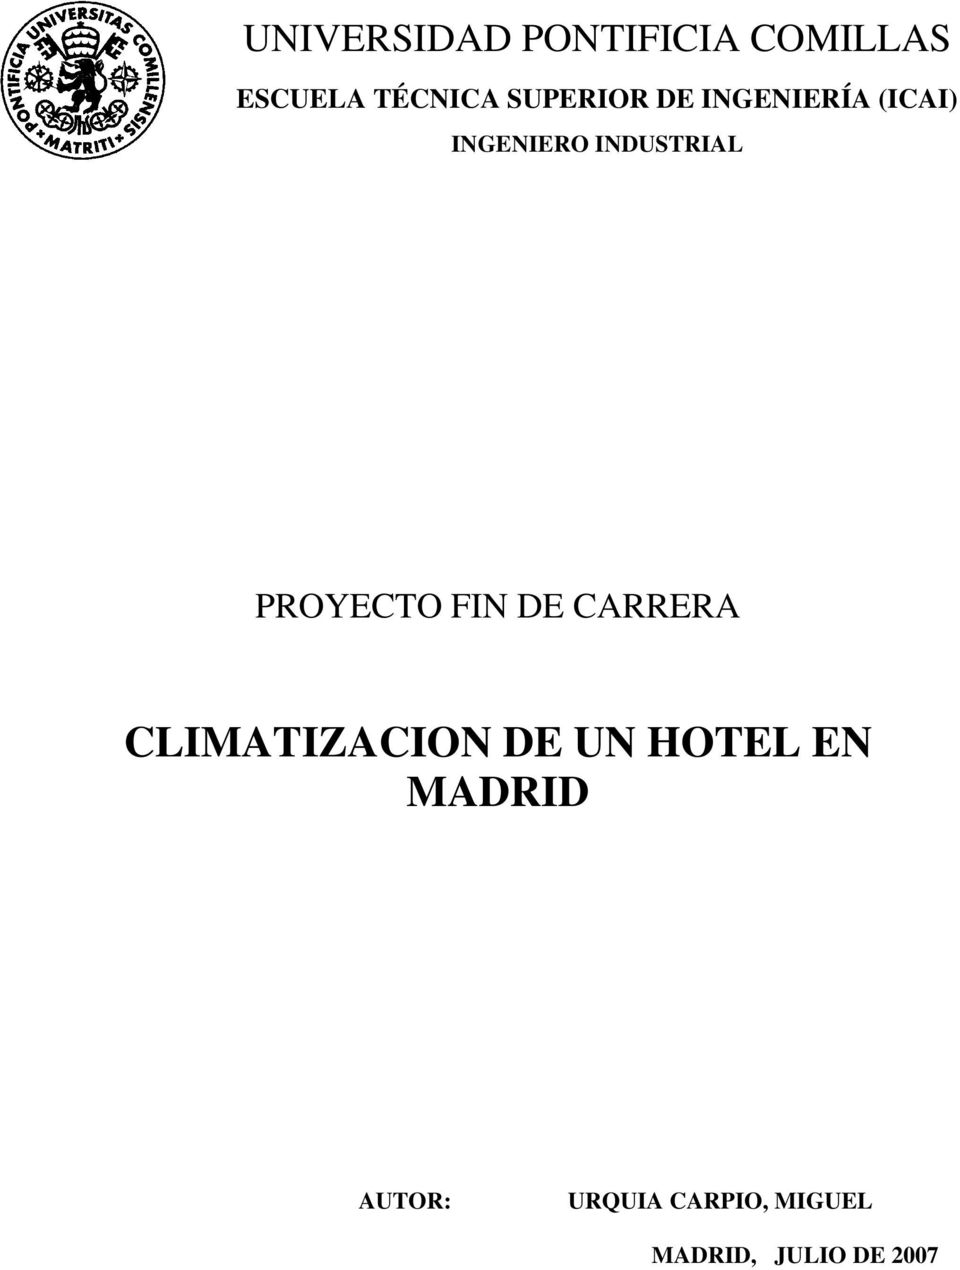 PROYECTO FIN DE CARRERA CLIMATIZACION DE UN HOTEL EN